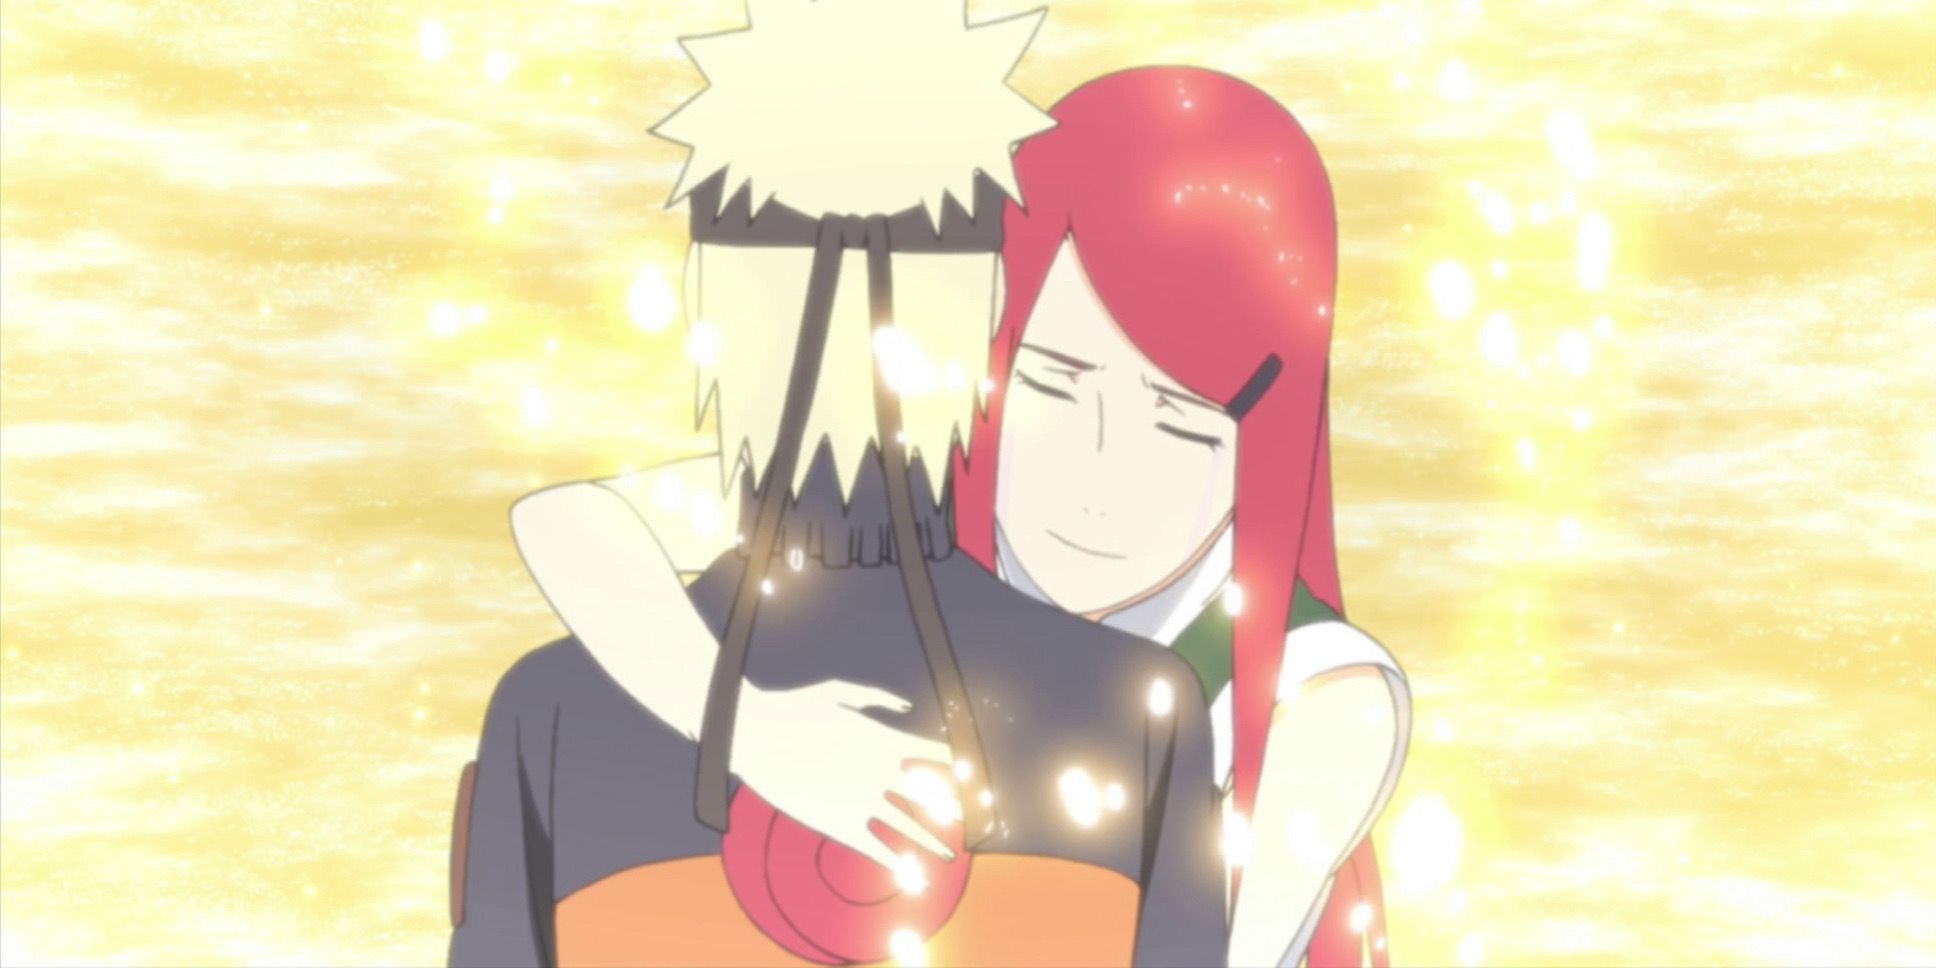 10 Most Heartwarming Scenes In Naruto, Ranked